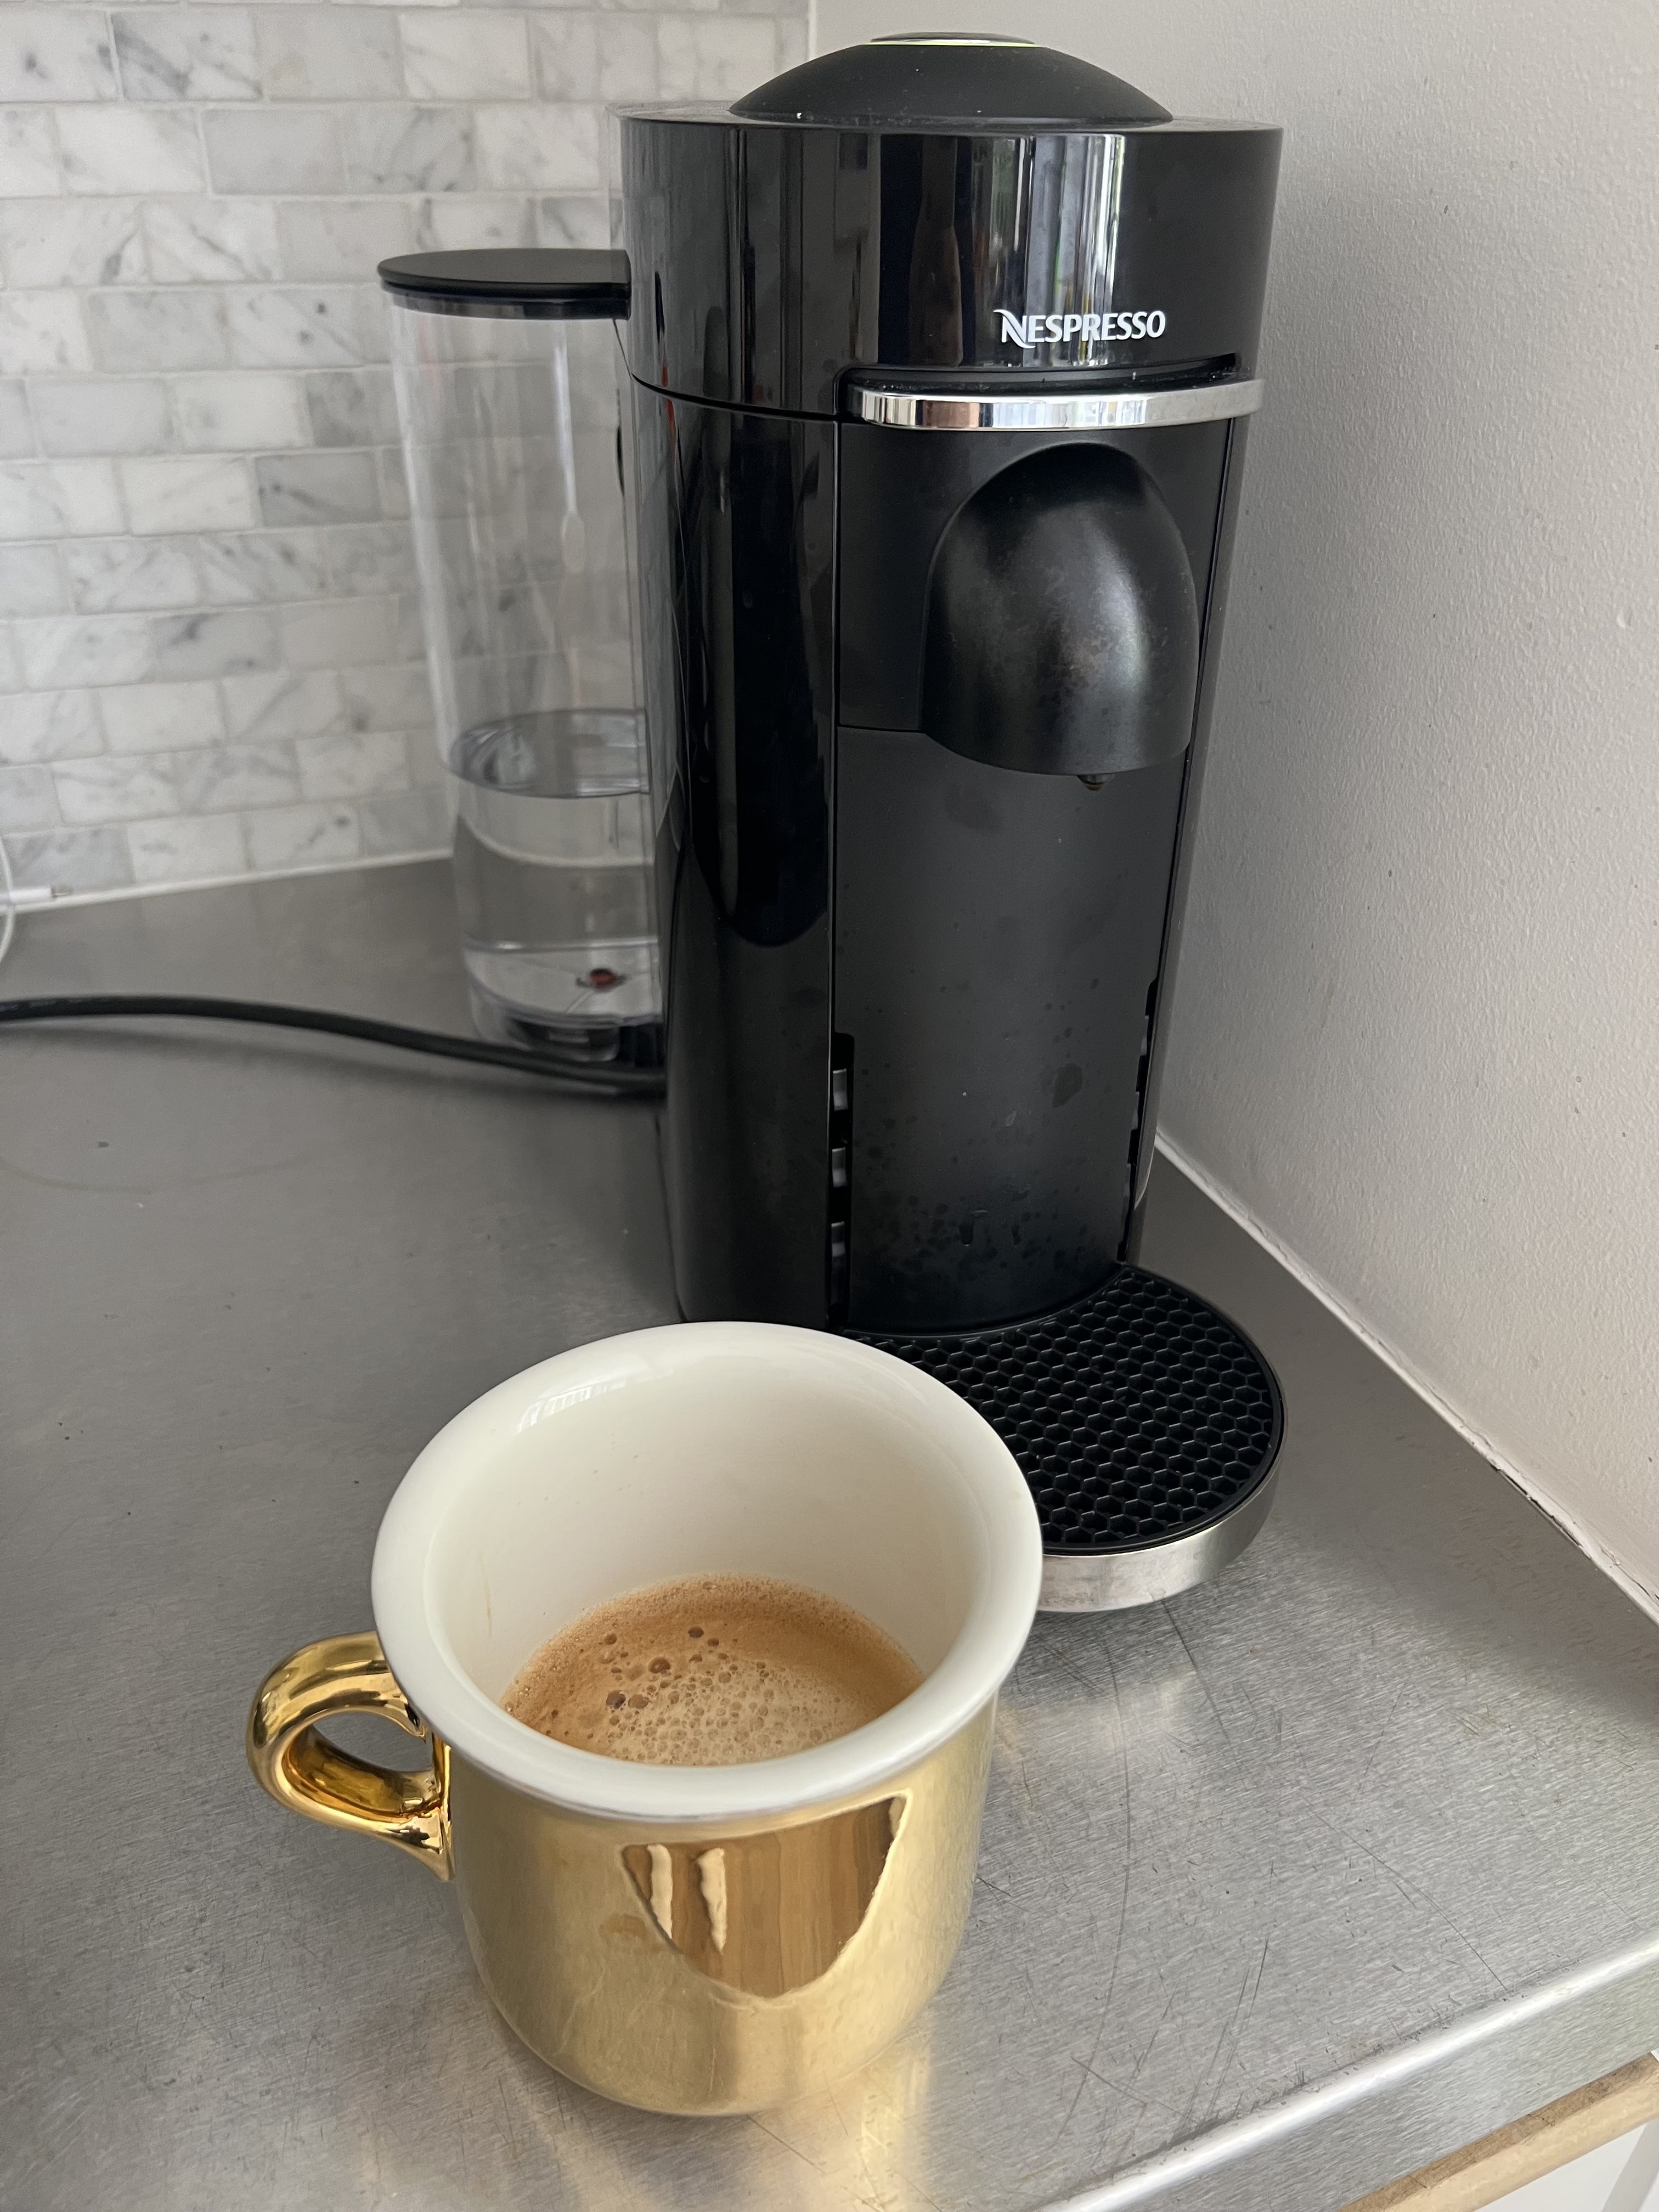 Nespresso Vertuo Plus Review 2023